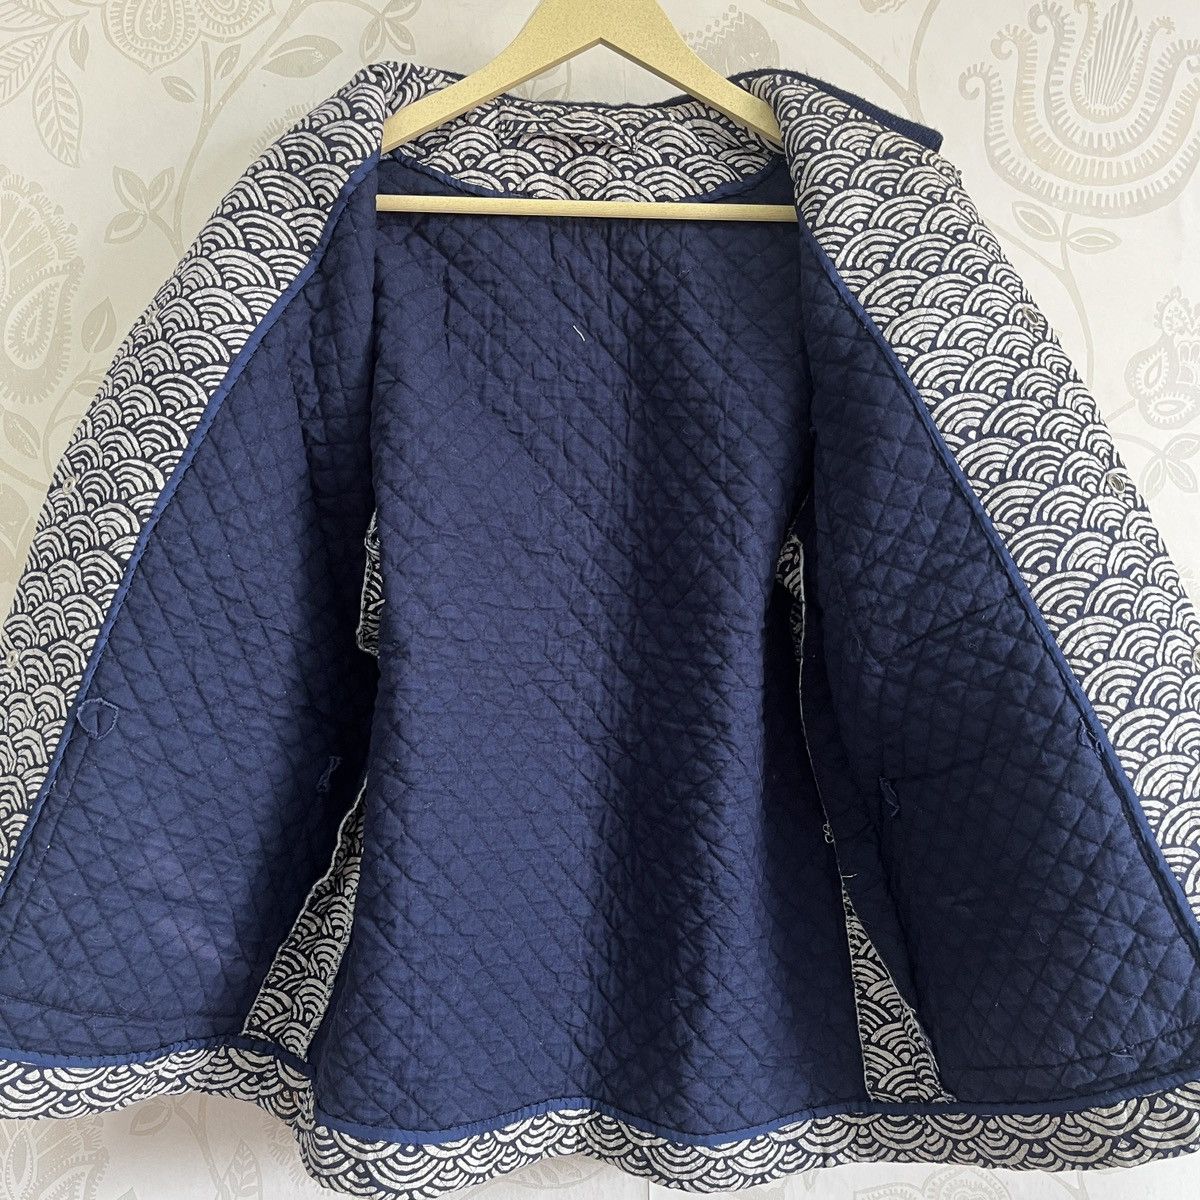 Vintage - Steals Quilted Sashiko Japan Sweater Winter - 12